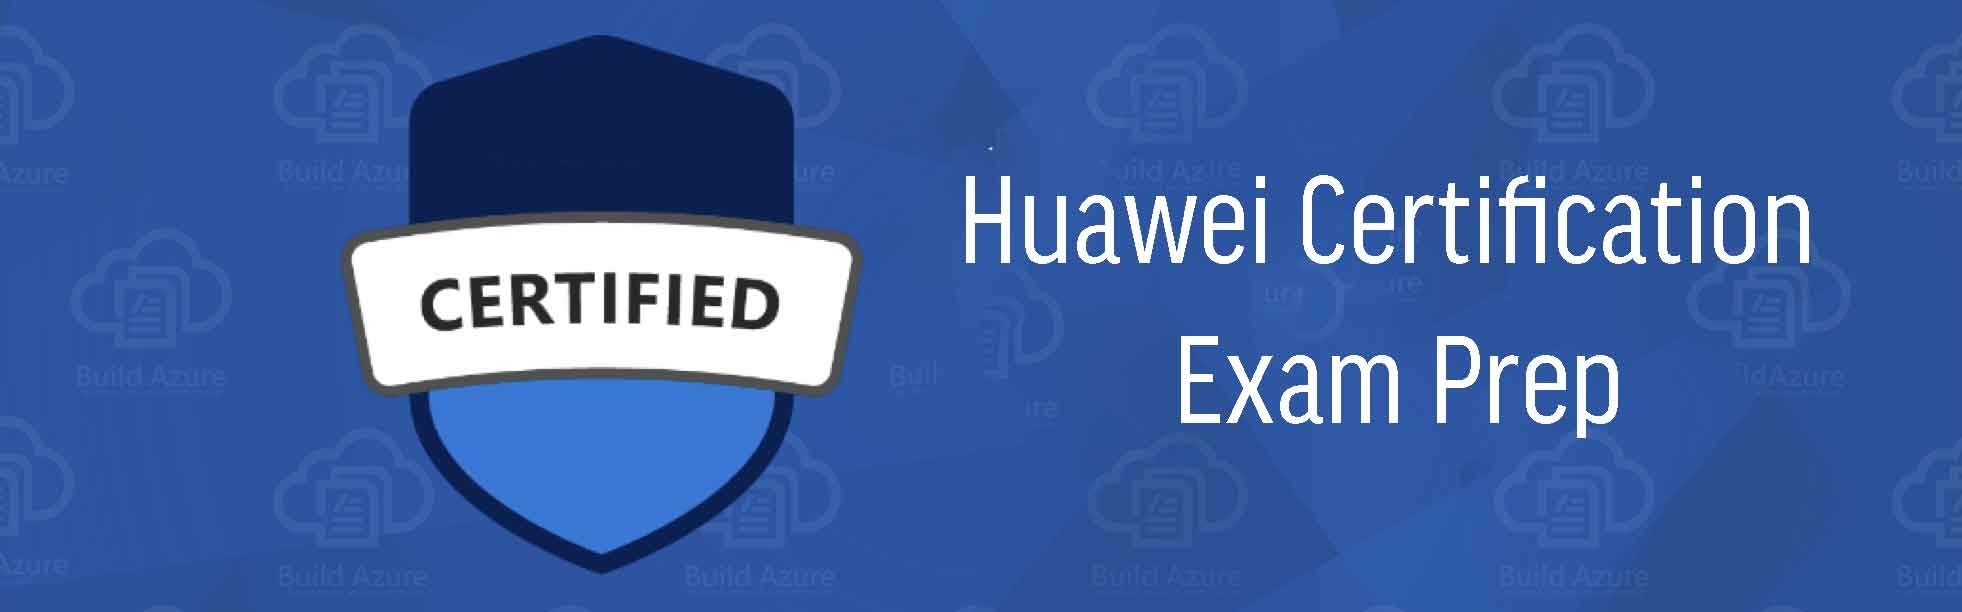 Huawei Certification Exam Prep